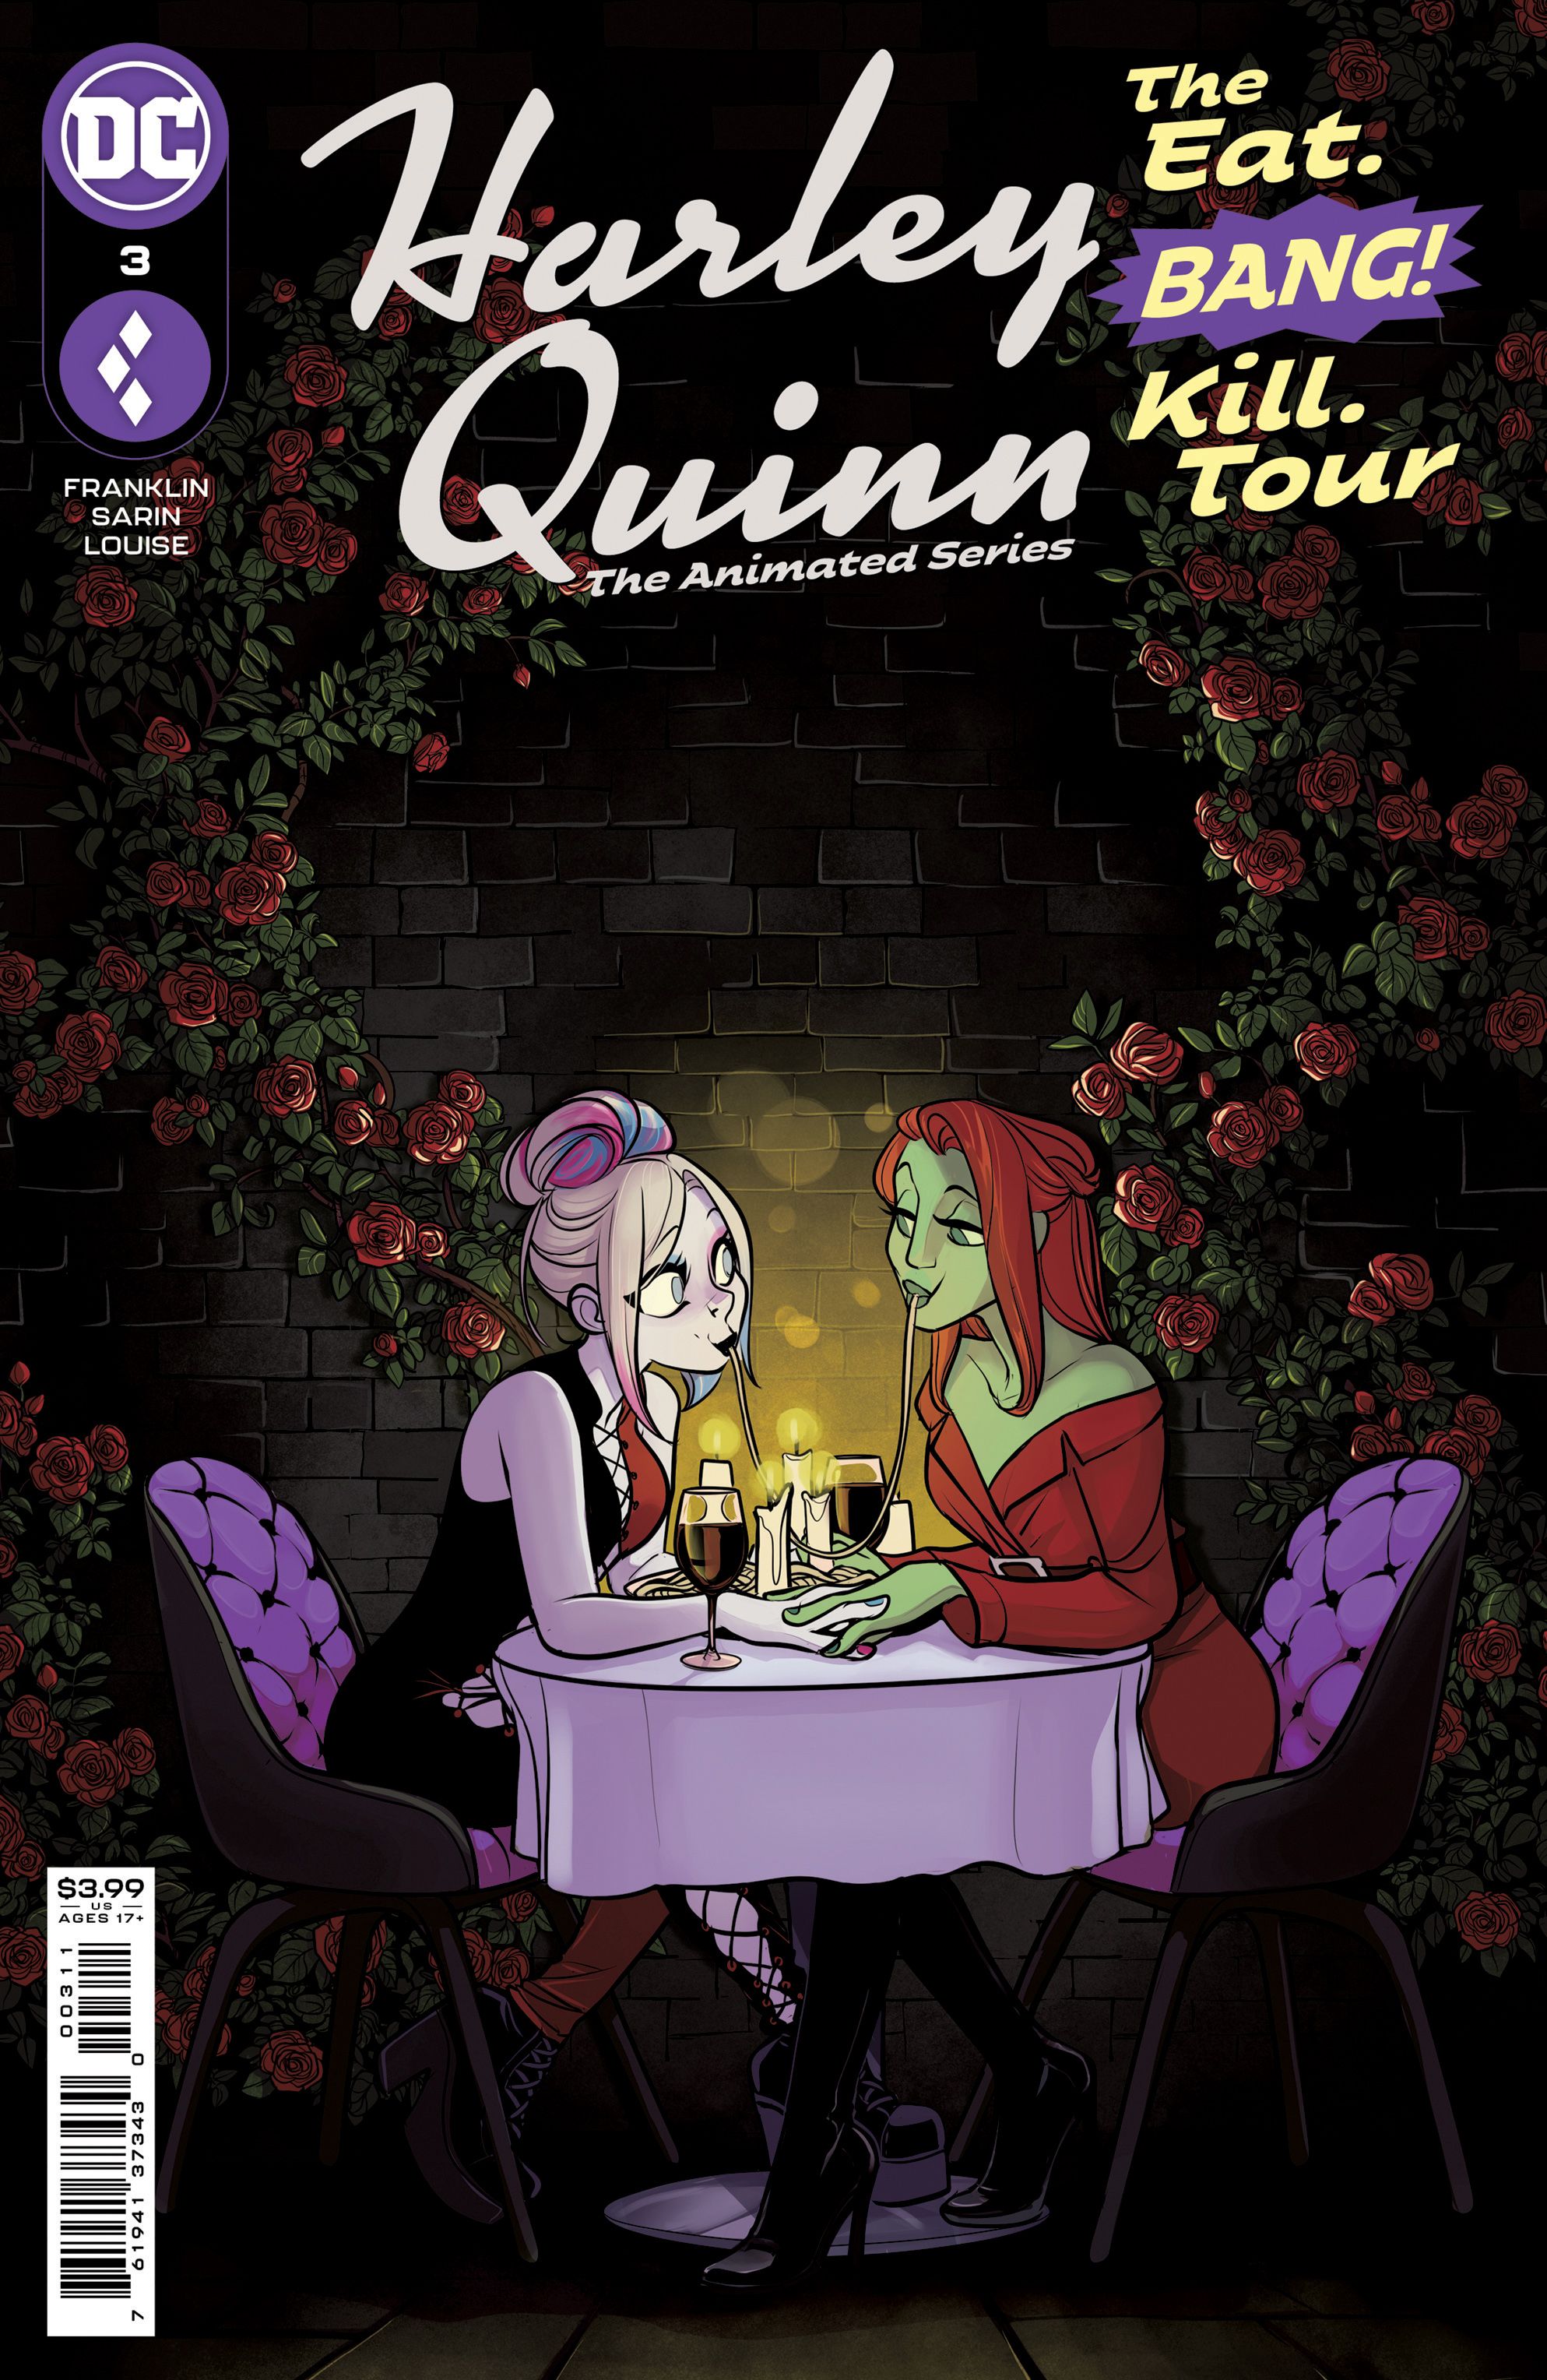 Harley Quinn: The Animated Series - The Eat, Bang, Kill Tour #3 Comic